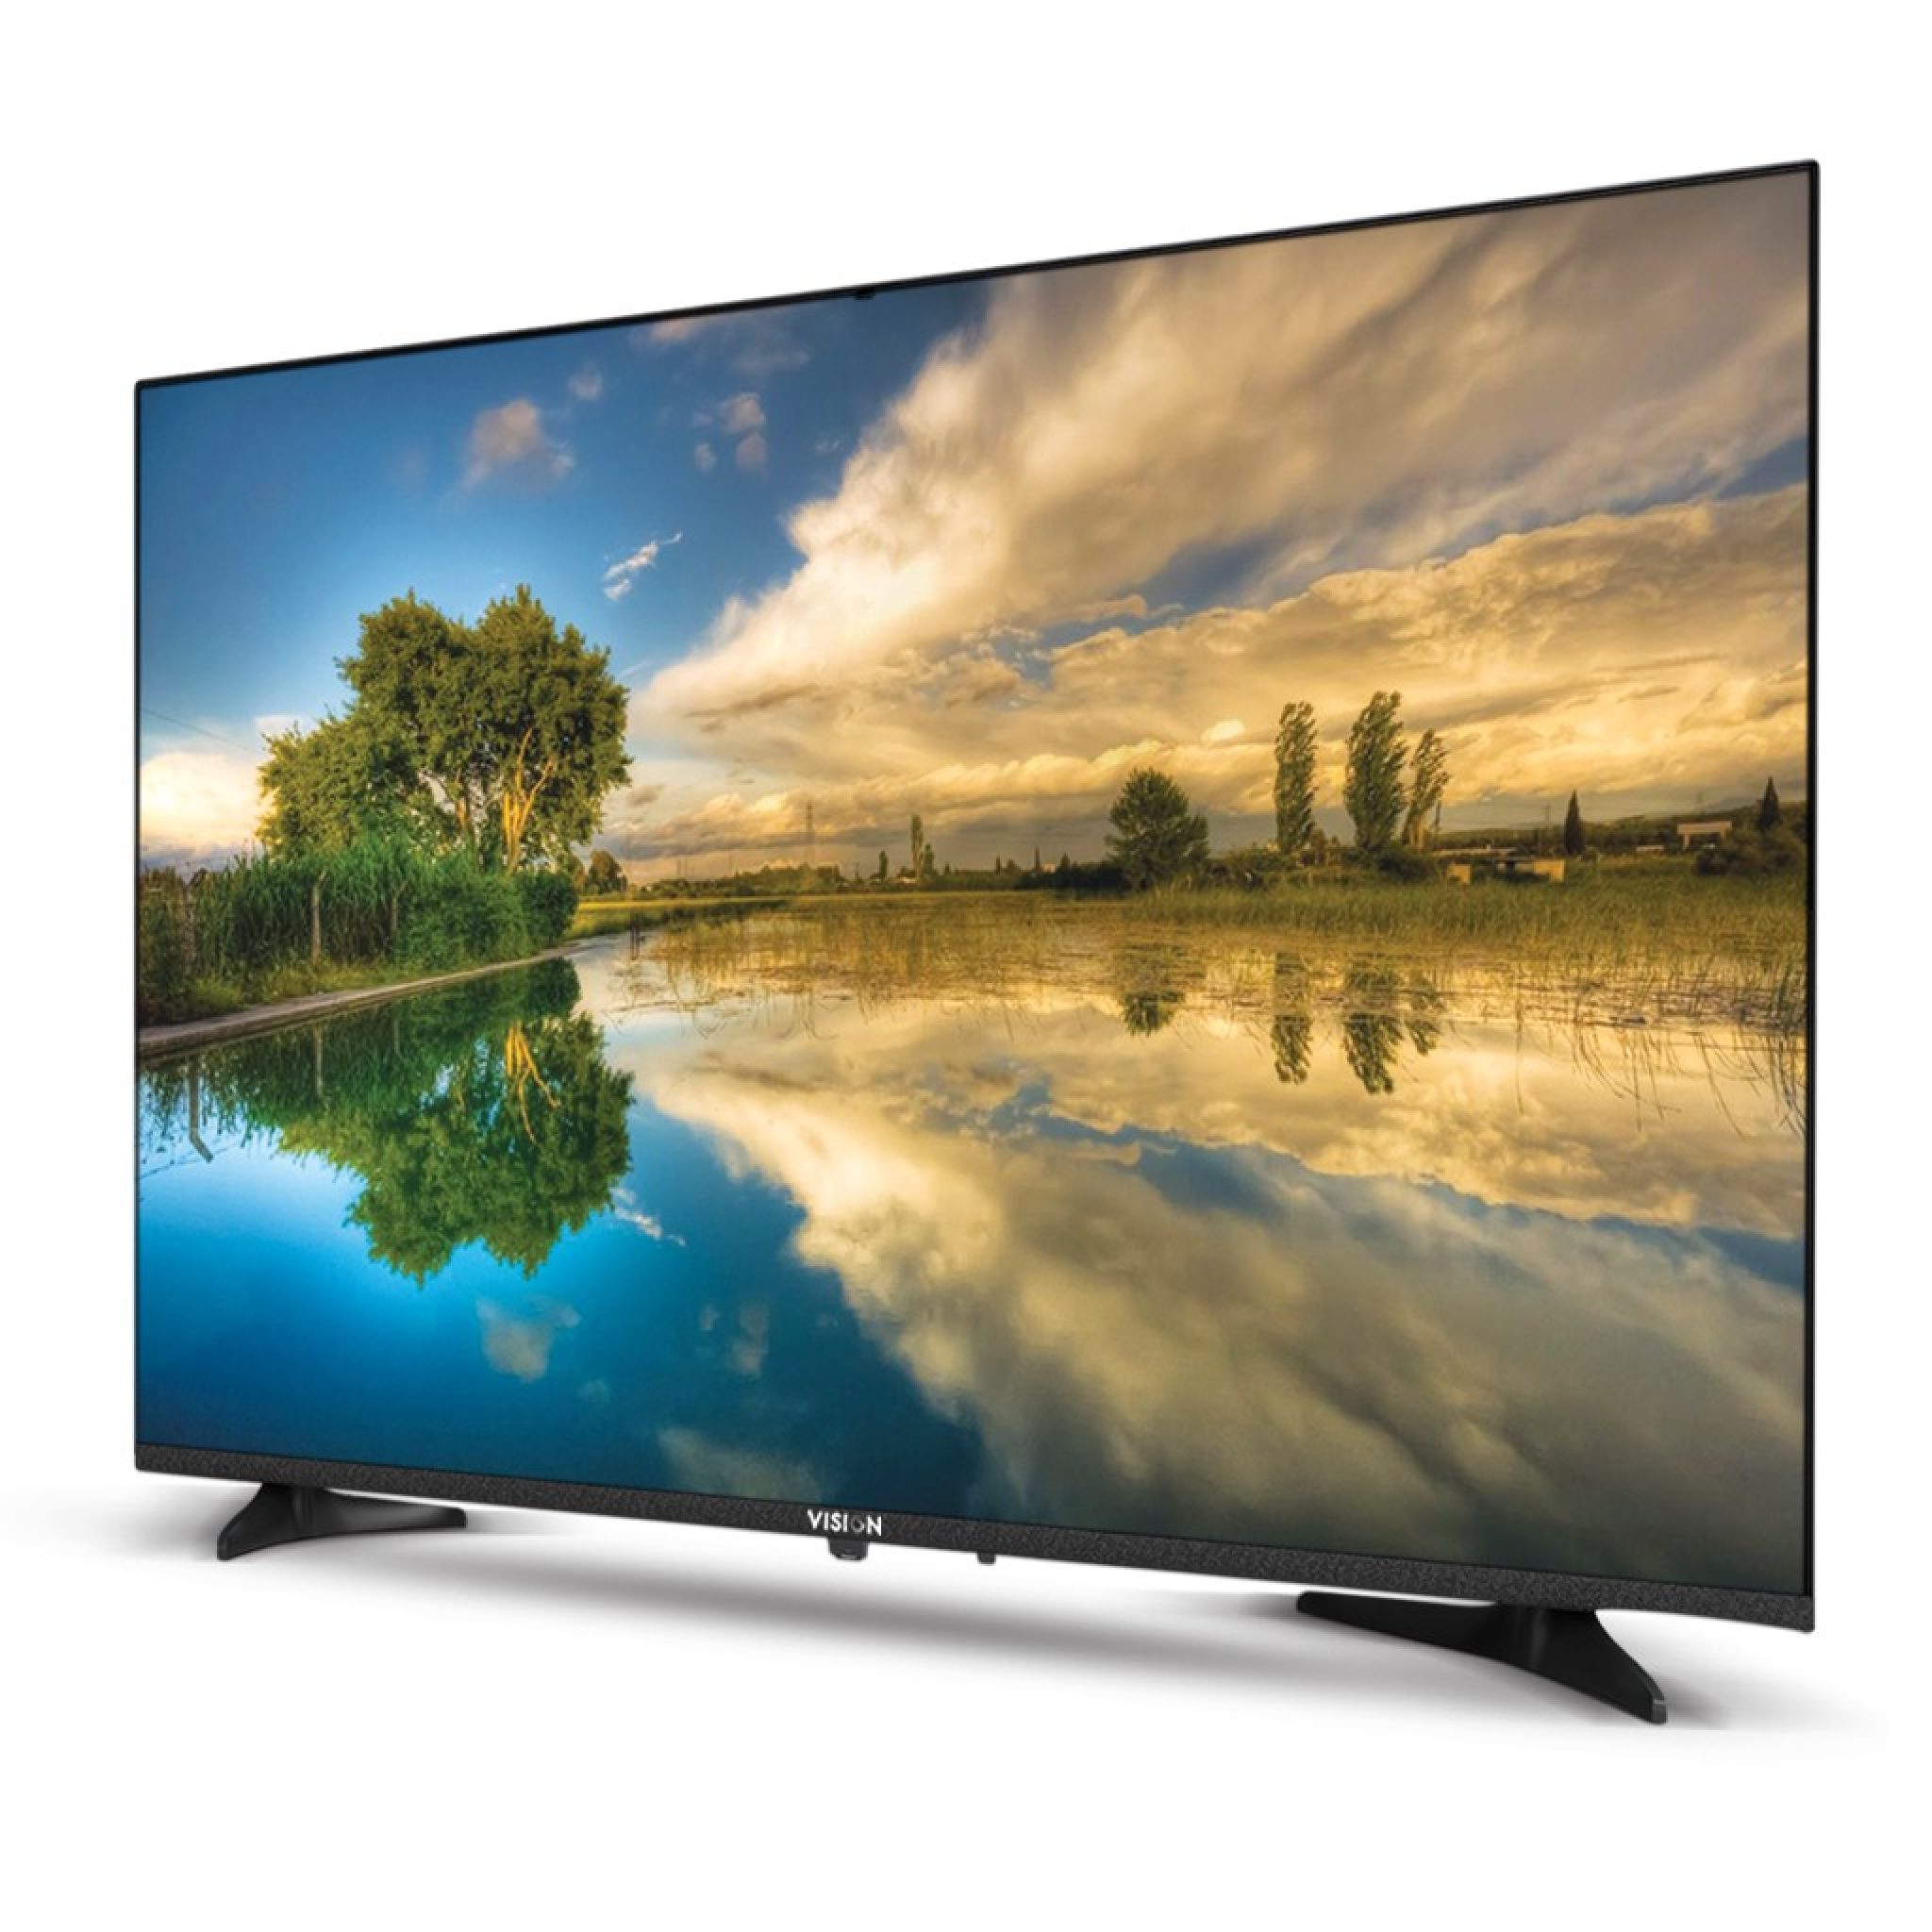 Самара купить телевизор смарт. Телевизор 32 дюйма смарт. Телевизор смарт 32 Артел. Samsung 32k6000.